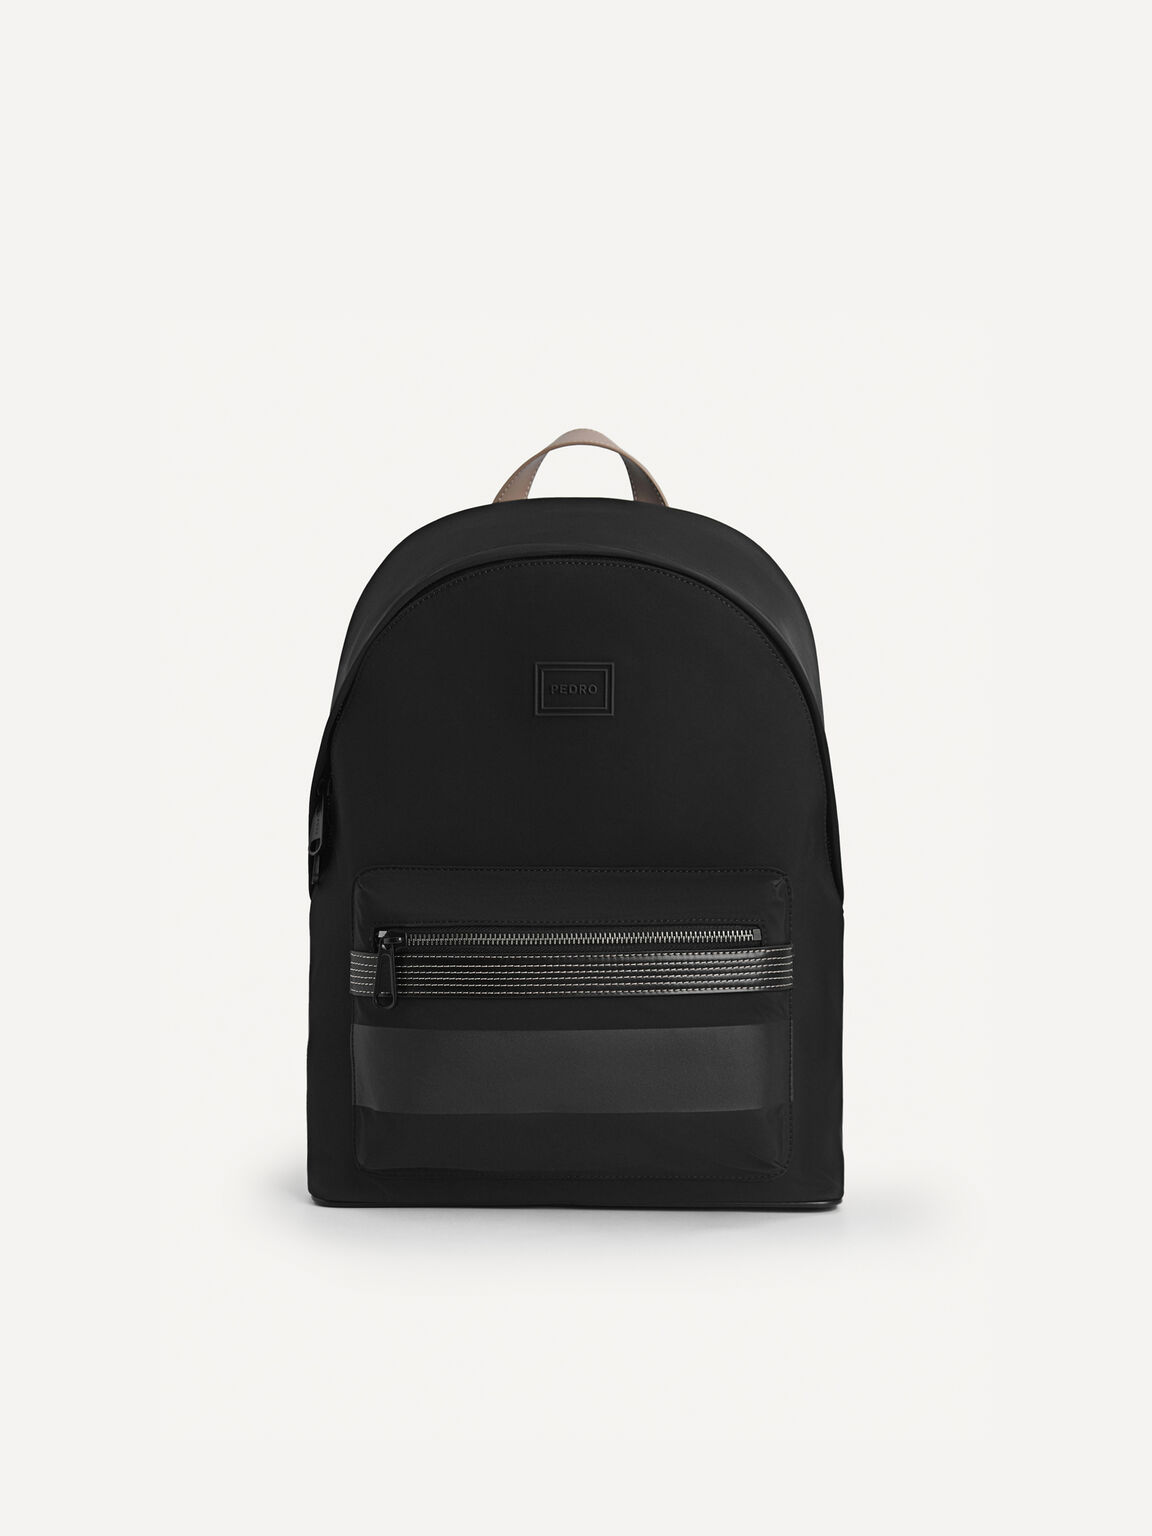 Monochrome Backpack, Black